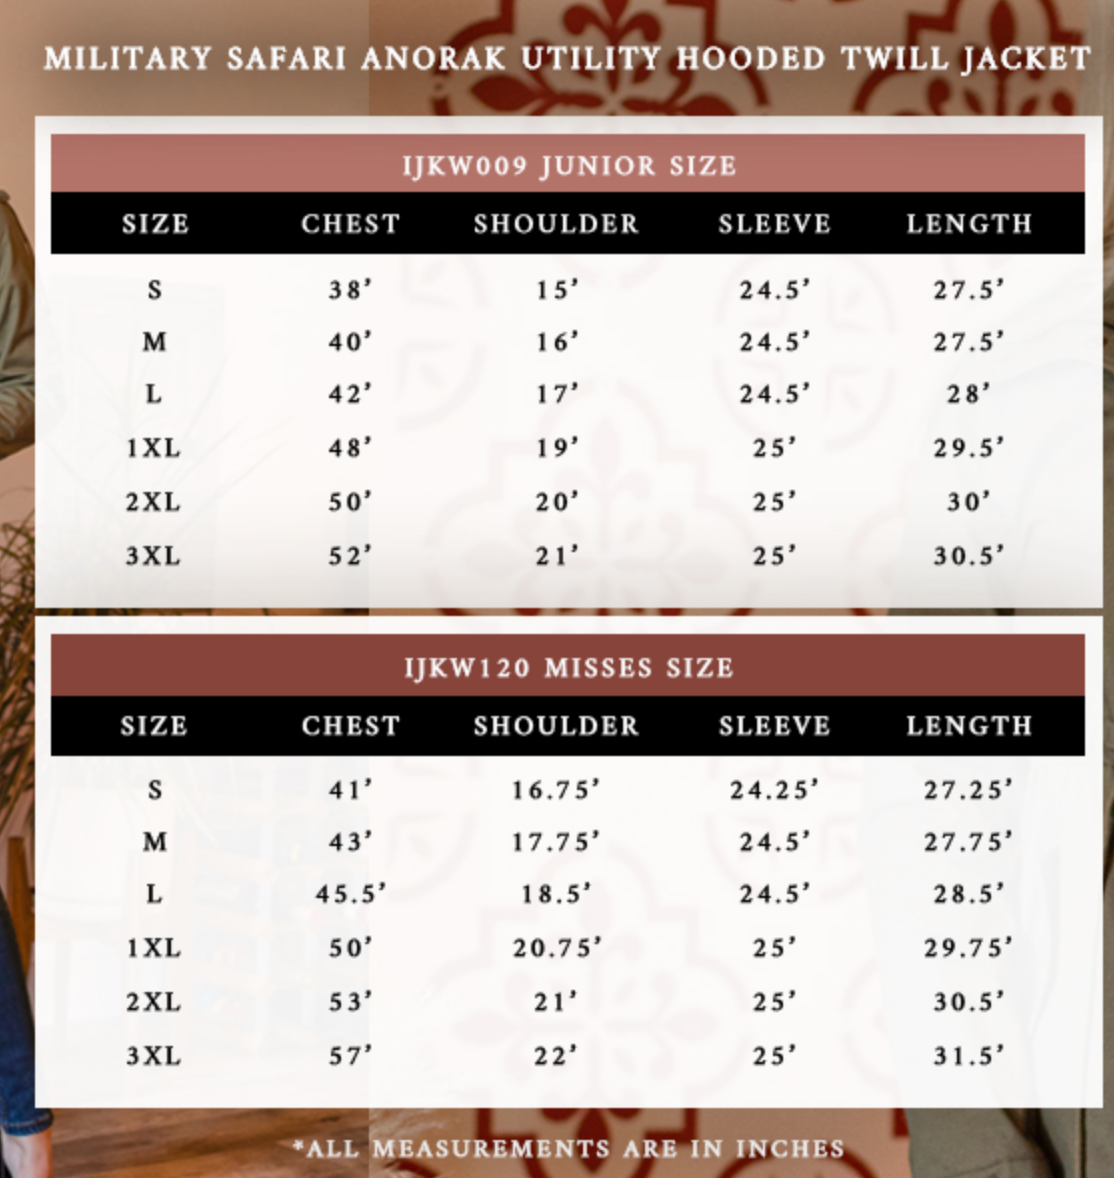 Design by Olivia Women's Military Anorak Safari Hoodie Jacket from Amazon Size Chart